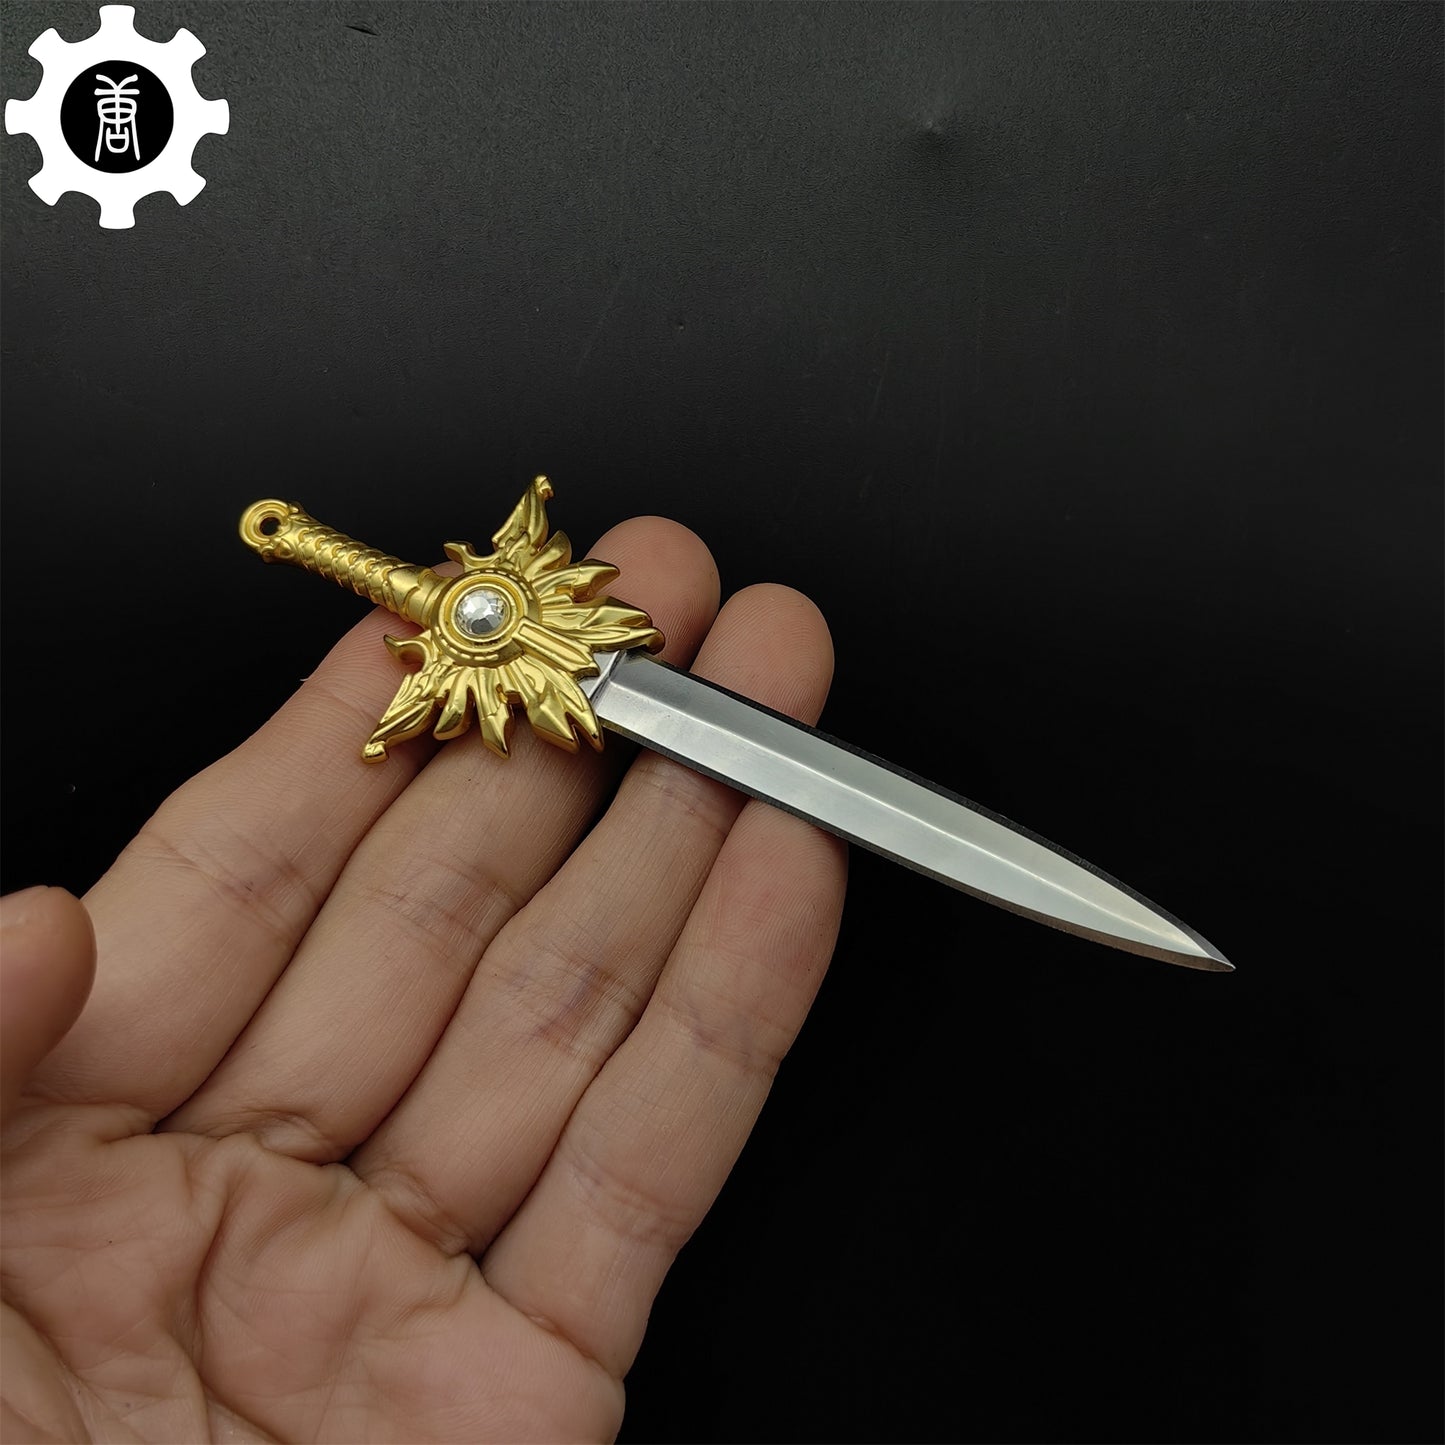 El'druin Tyrael Sword Mini Metal Replica EDC Knife